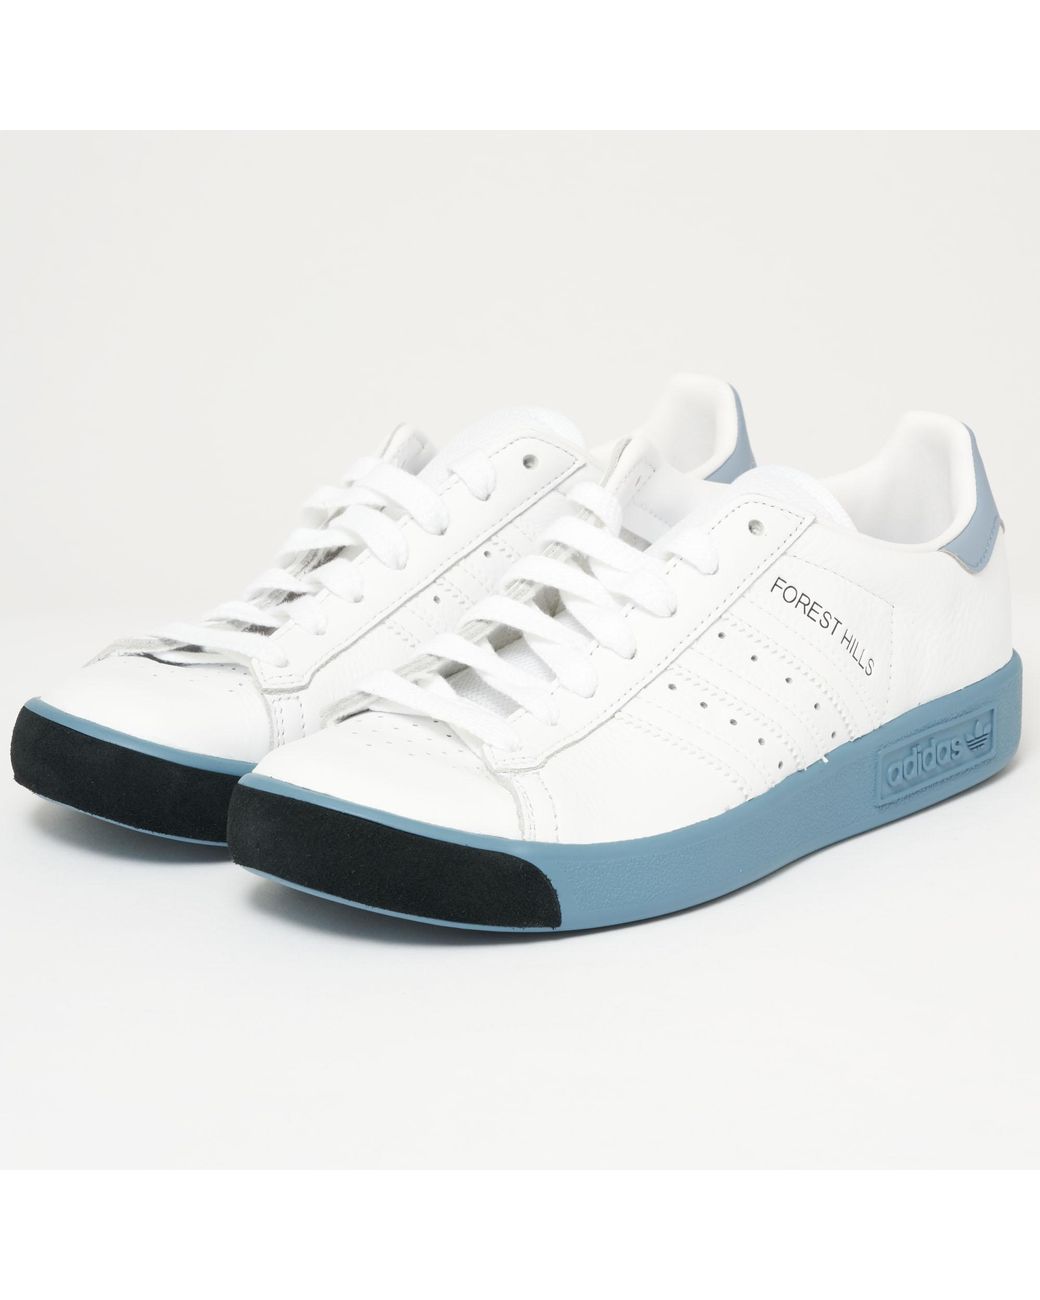 adidas Originals Leather Forest Hills - White & Blue | Lyst Australia